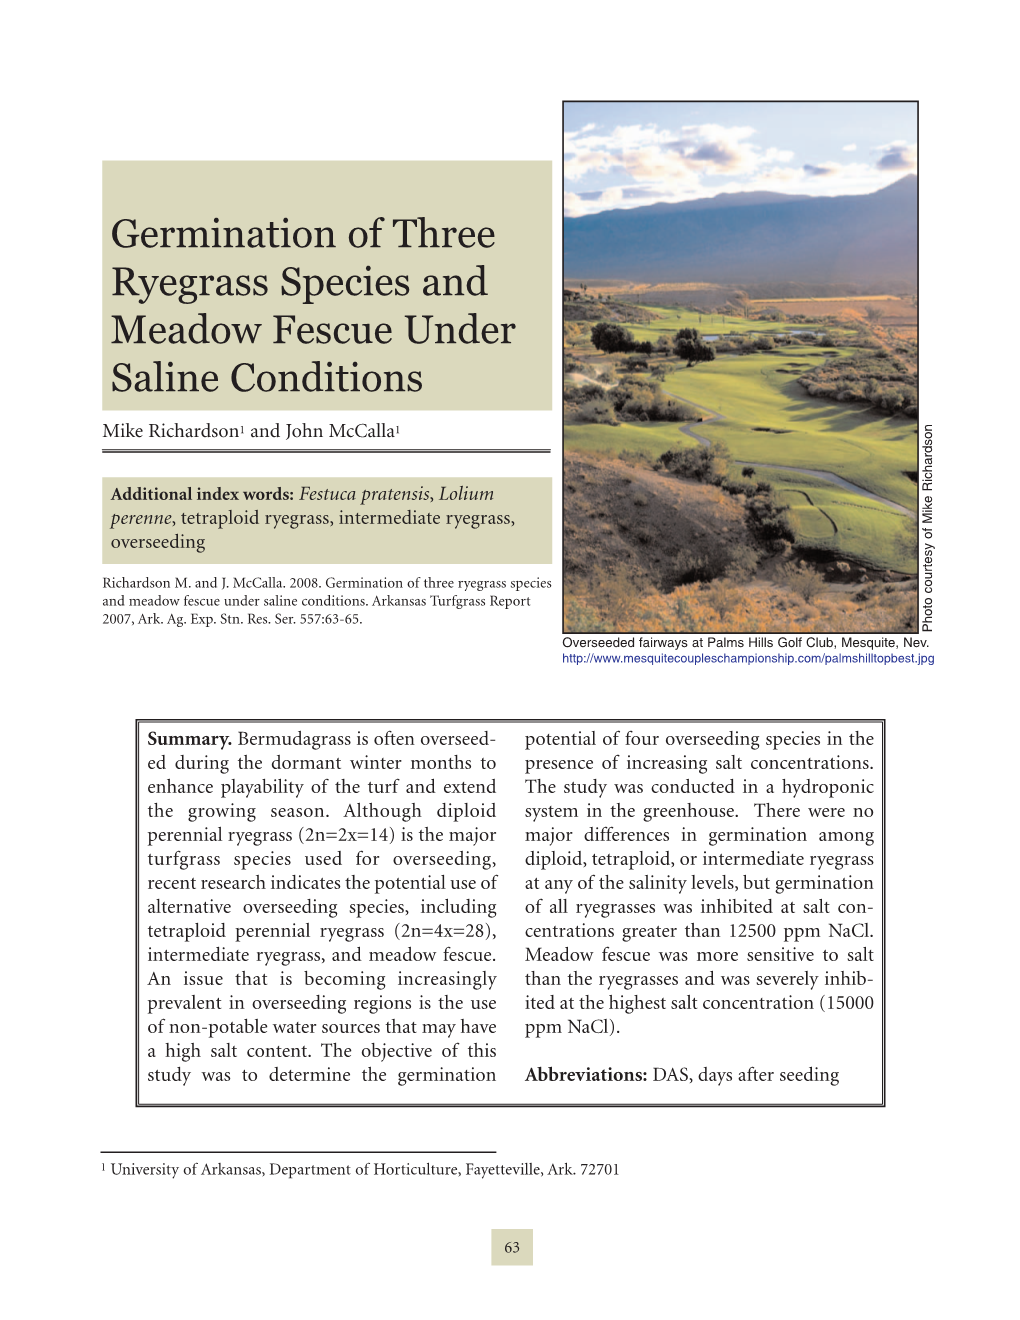 Germination of Three Ryegrass Species and Meadow Fescue Under Saline Conditions